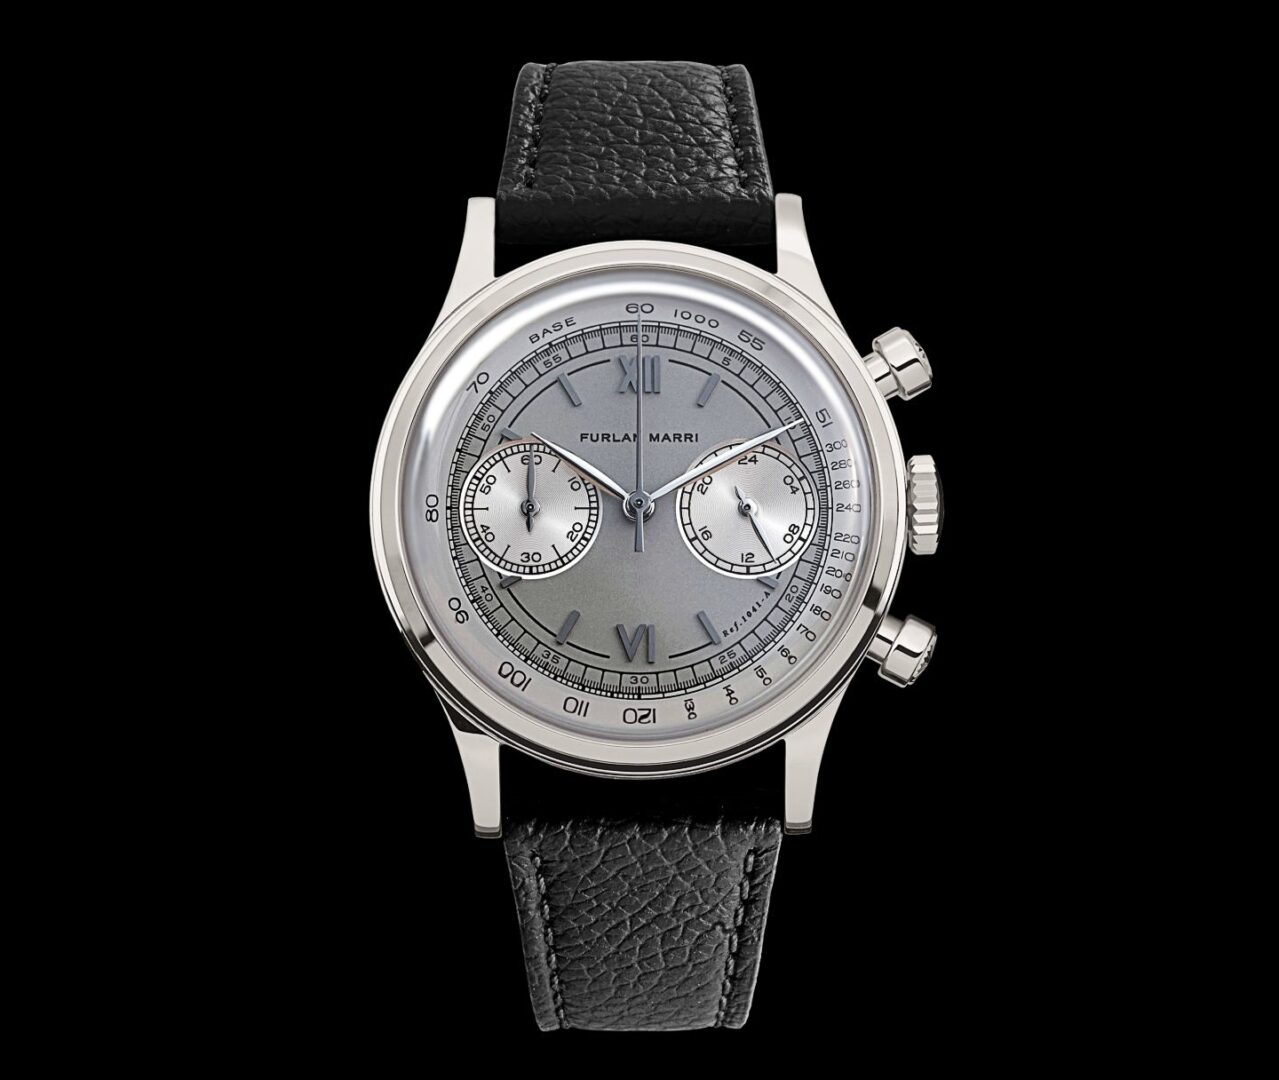 Furlan Marri MR Grey Ref 1041 A winning watch of the Horological Revelation Prize 2021 1440x1440 1